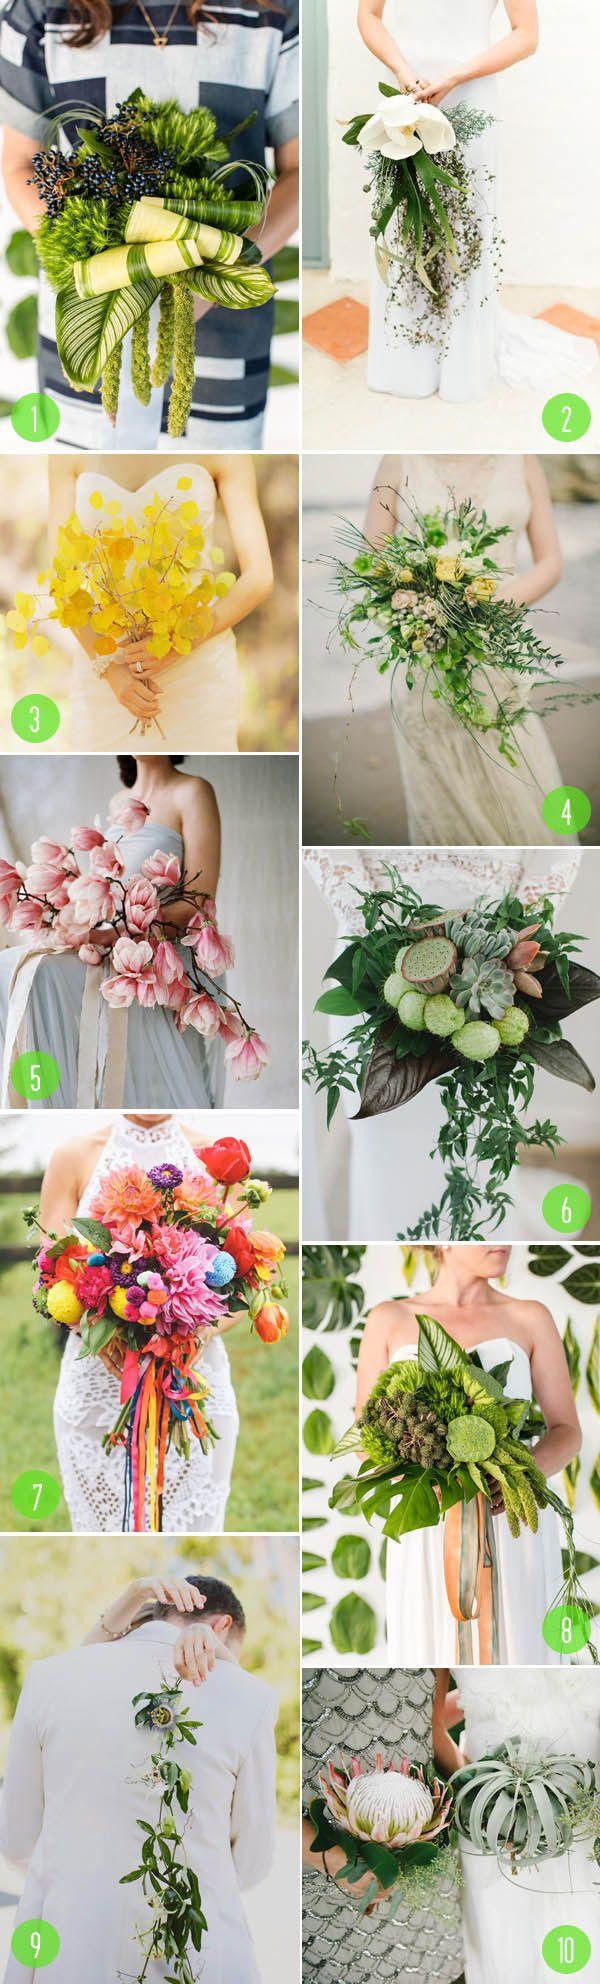 زفاف - Top 10: Unusual Bouquets